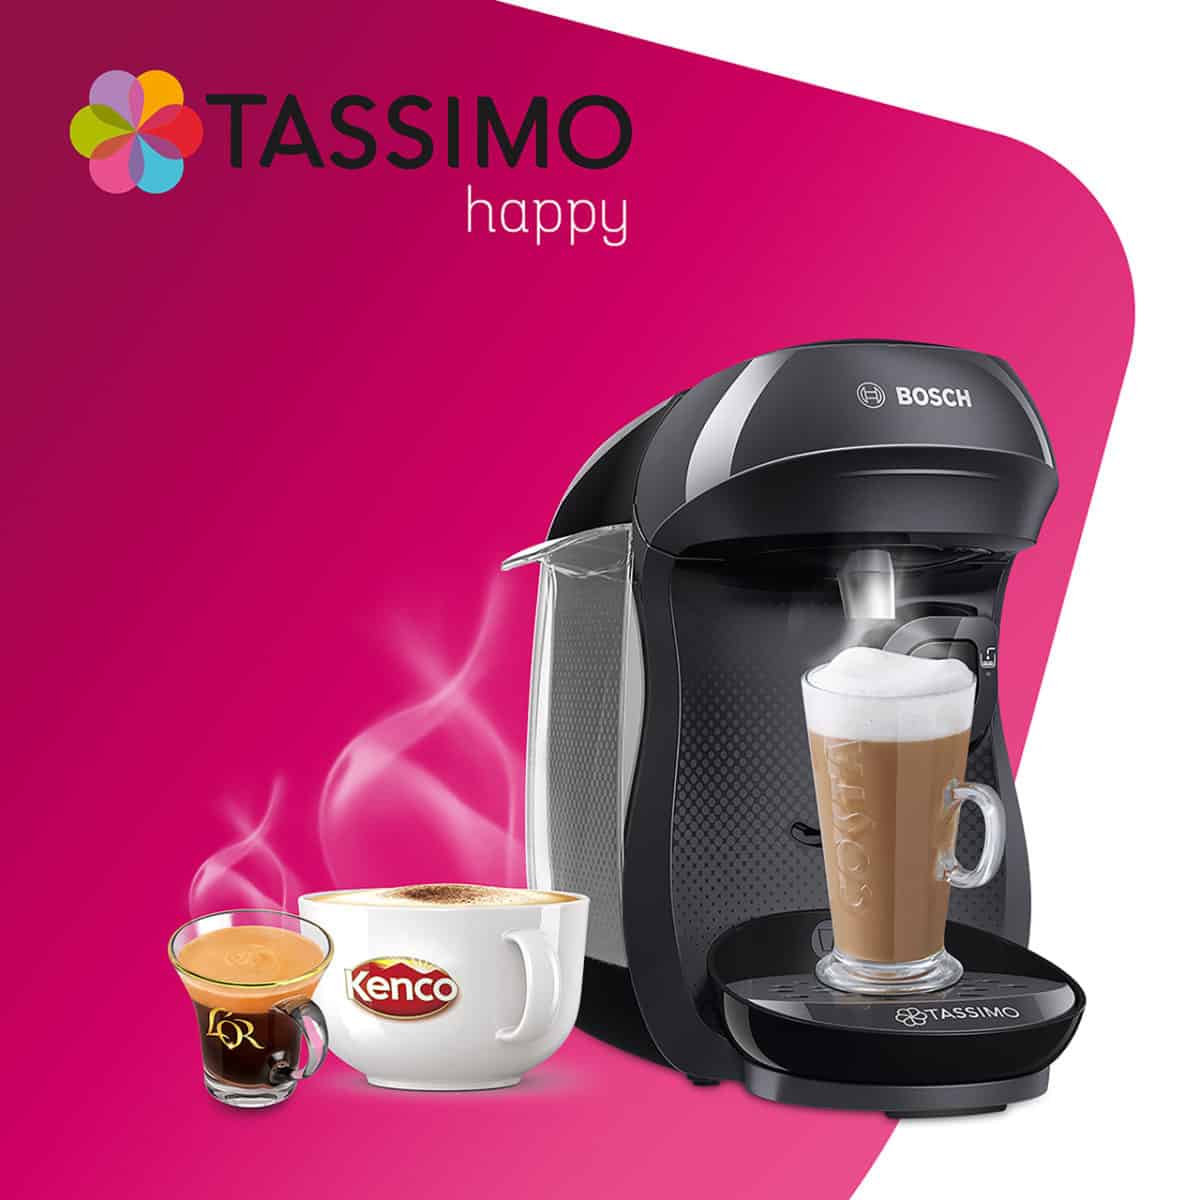 Happy by Tassimo, un bon café d'un seul clic